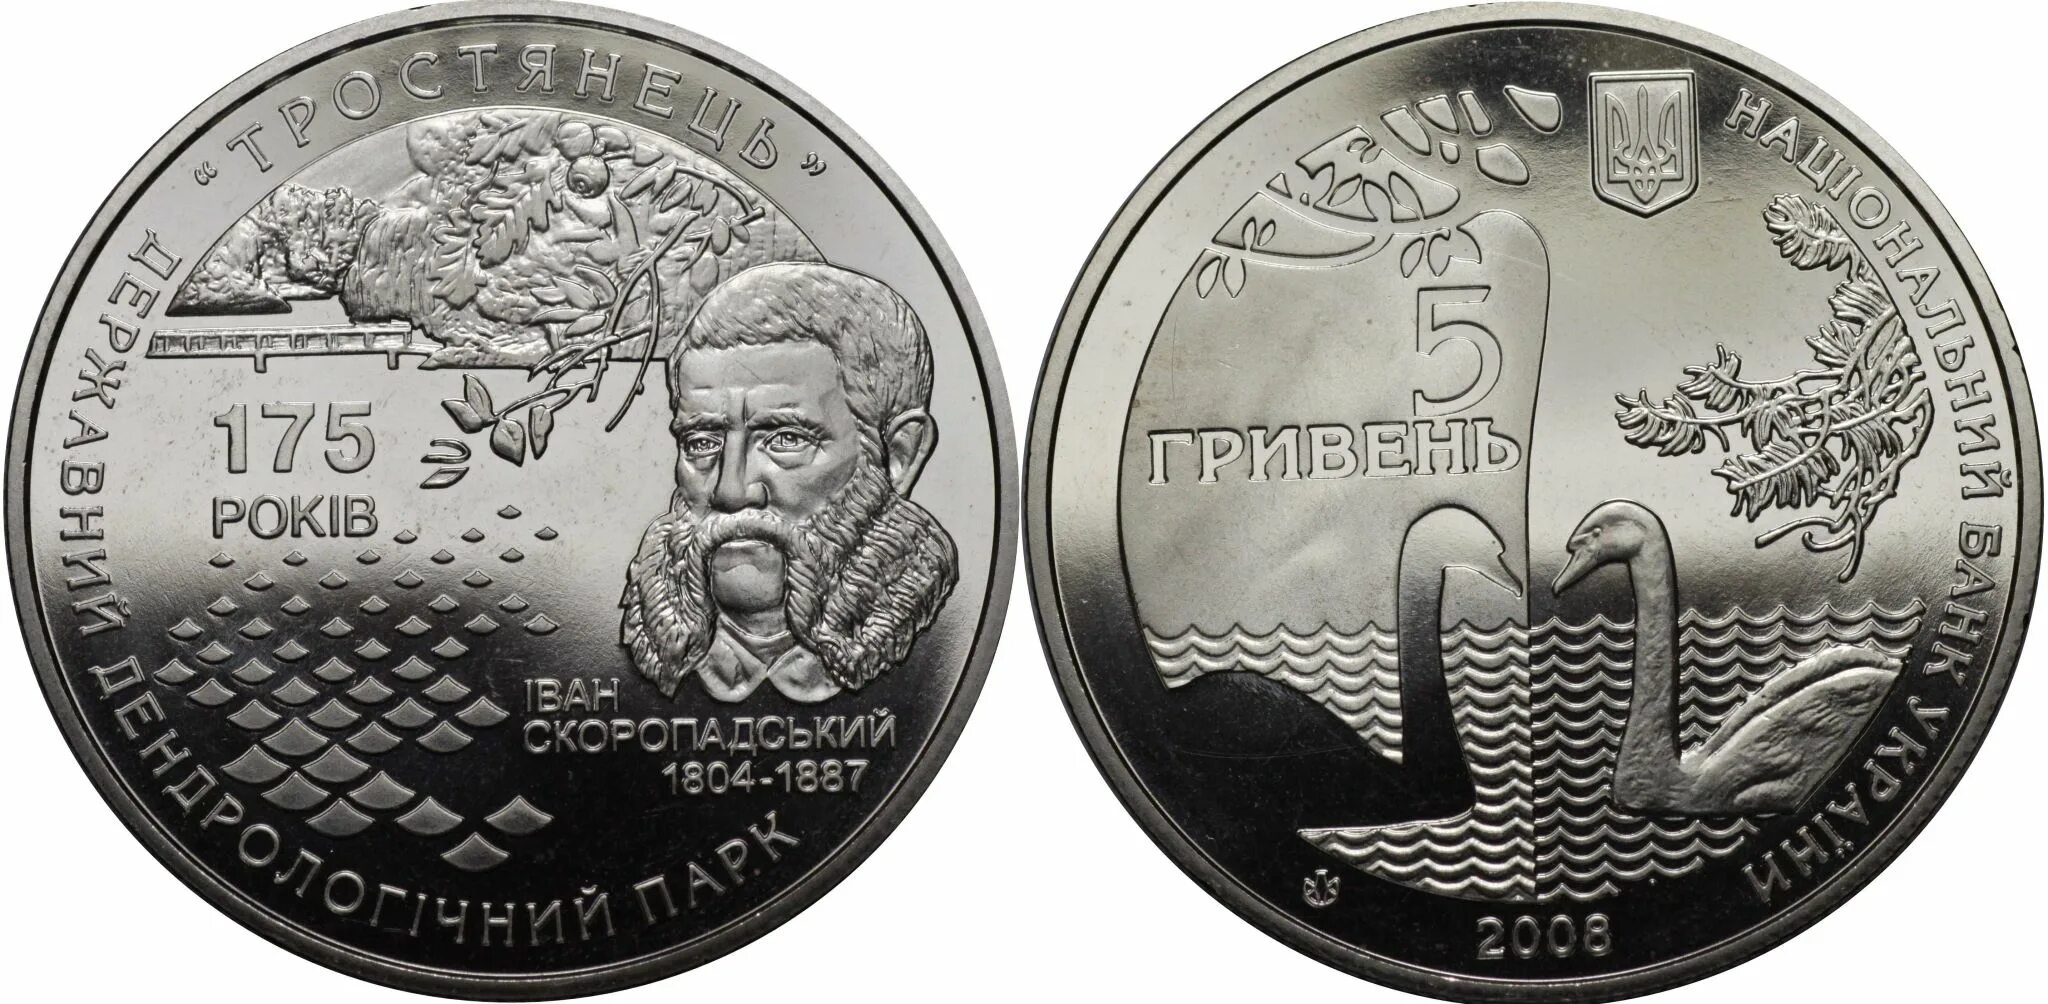 Украина 5 гривен 2008 Тростянец. 5 Гривен 2008 монета. 5 Гривен. Украина. 2008. Монета Украина 5 гривны.